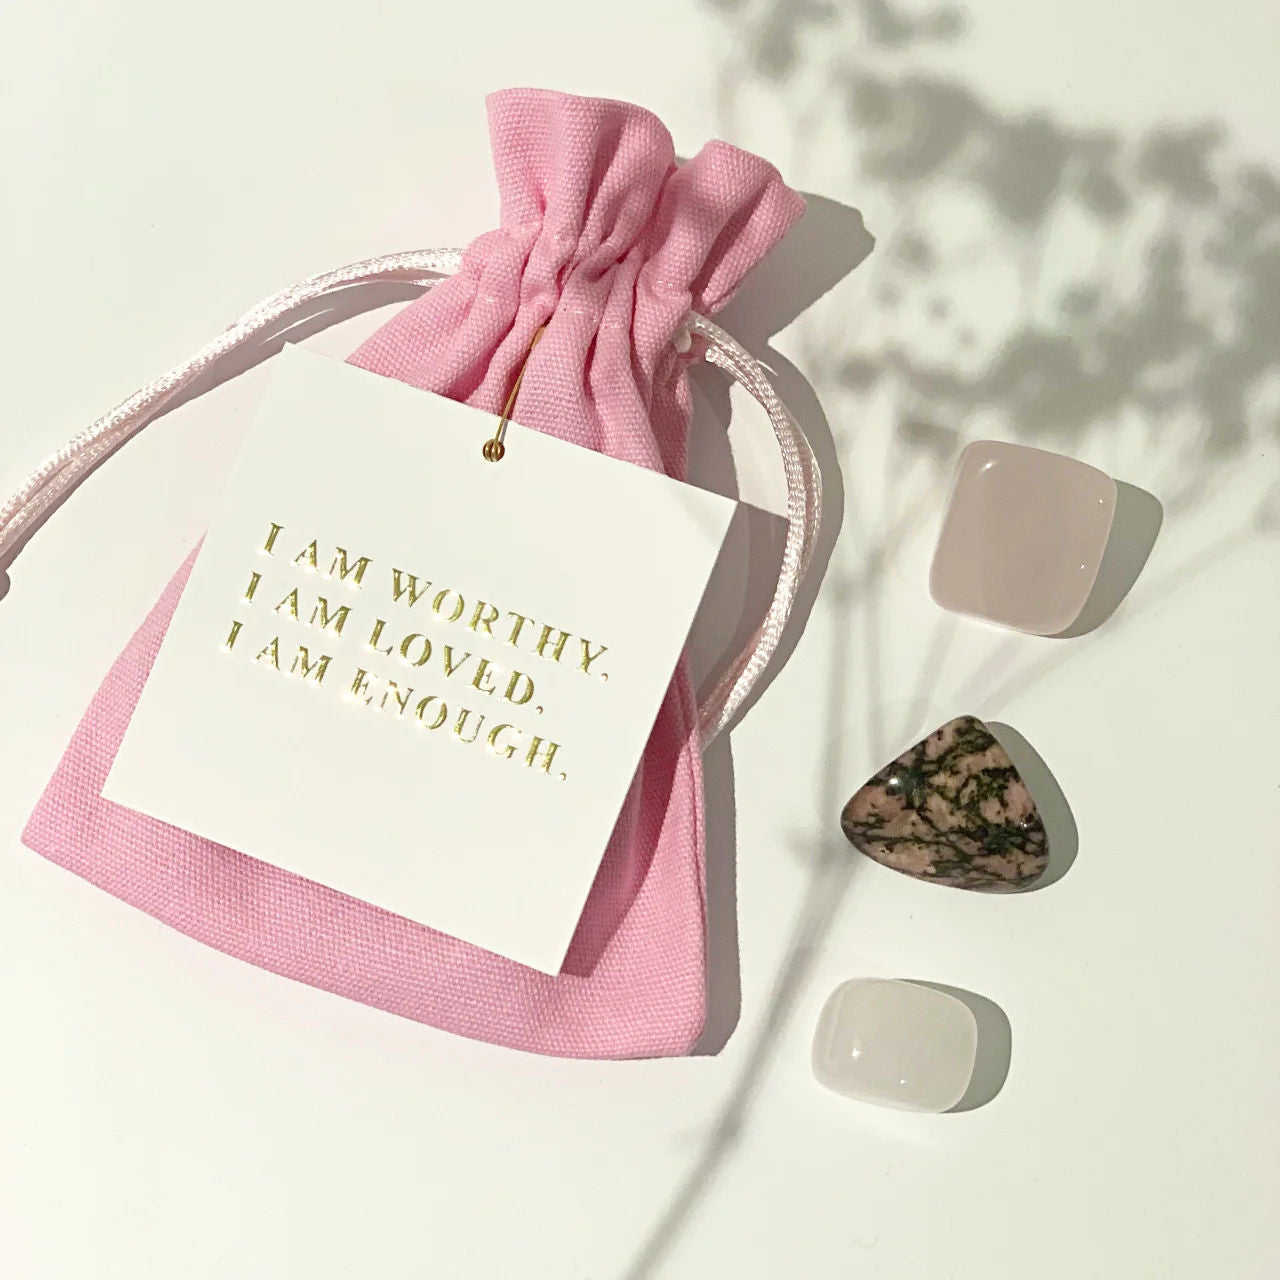 Self-Love Crystal Kit with Affirmation Card - Set of 3 Crystals (Rose Quartz, Clear Quartz, Rhodonite)